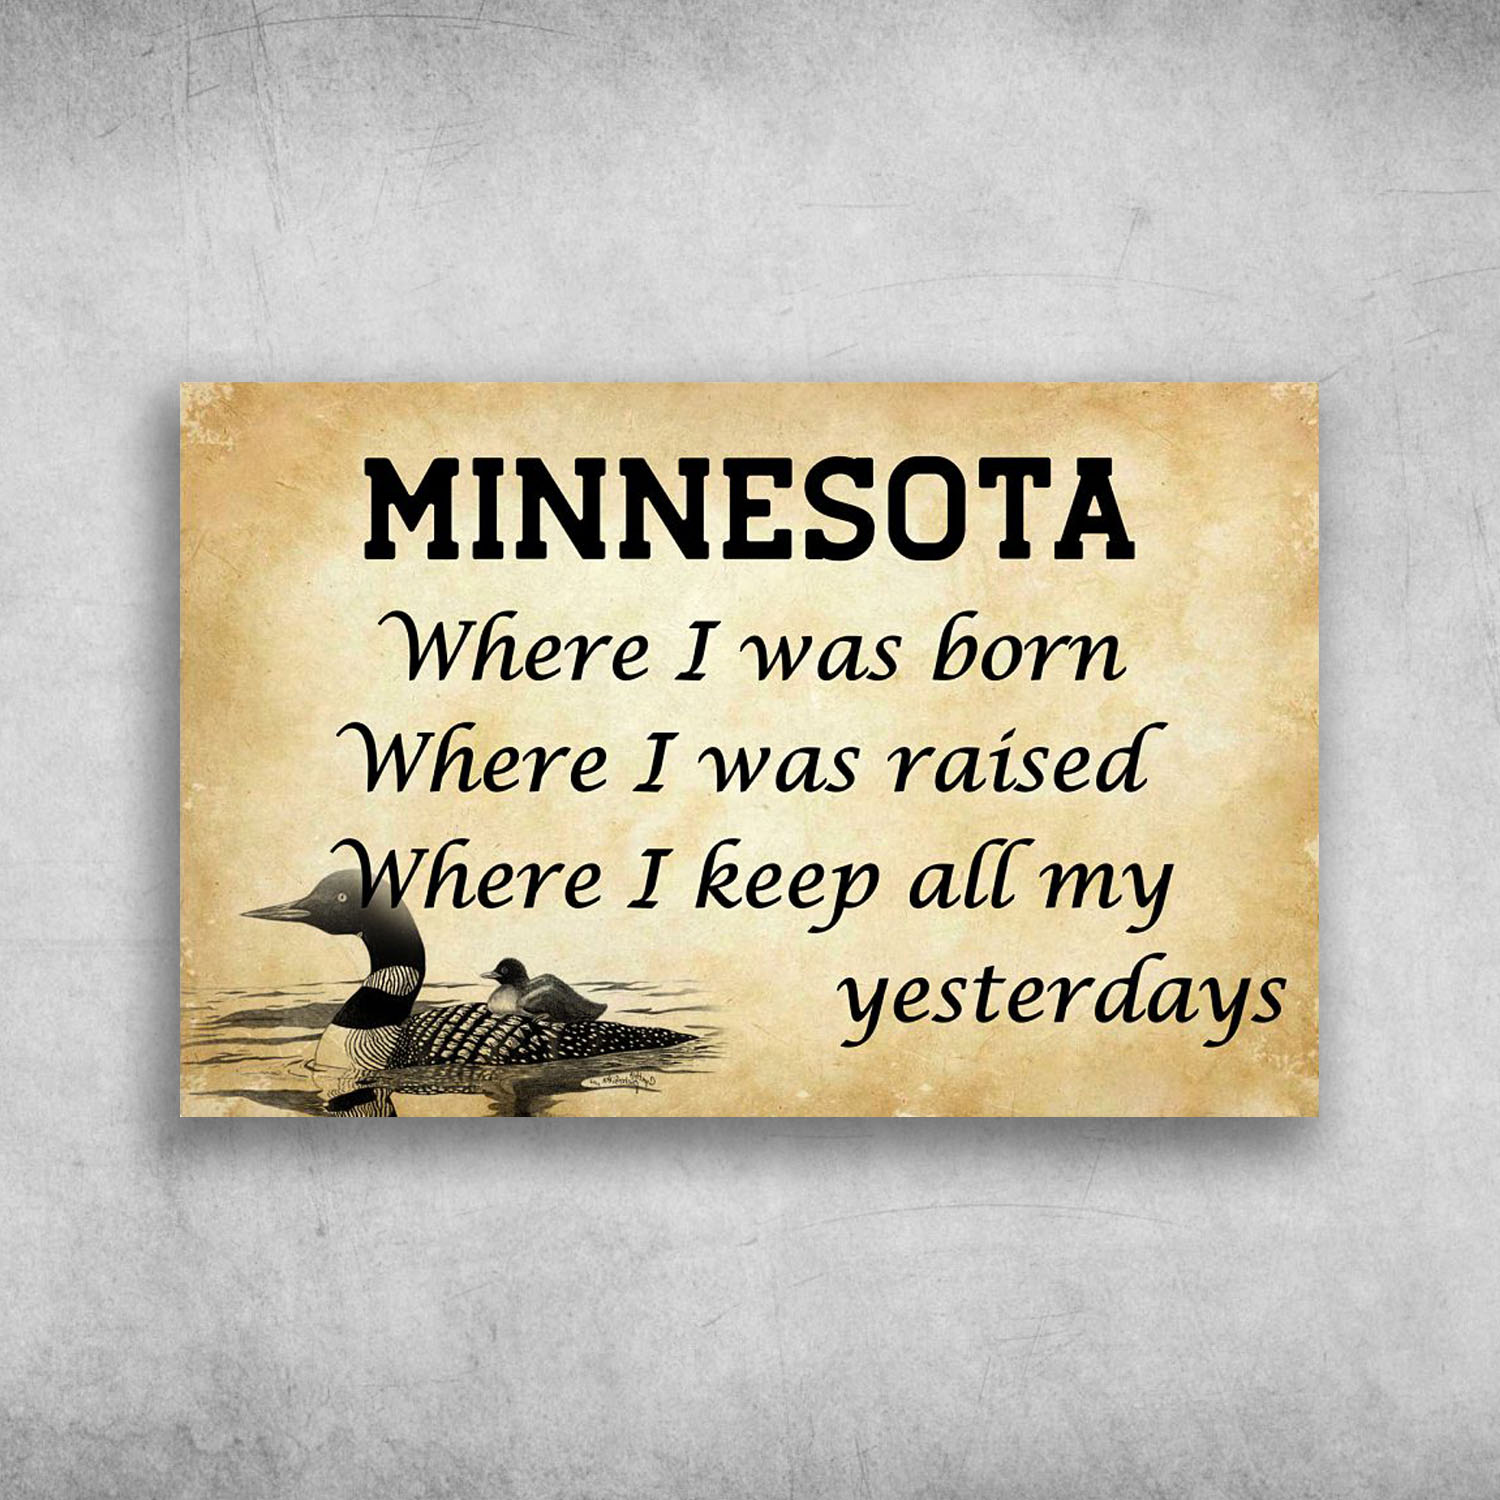 Minnesota Where I Keep All My Yesterday